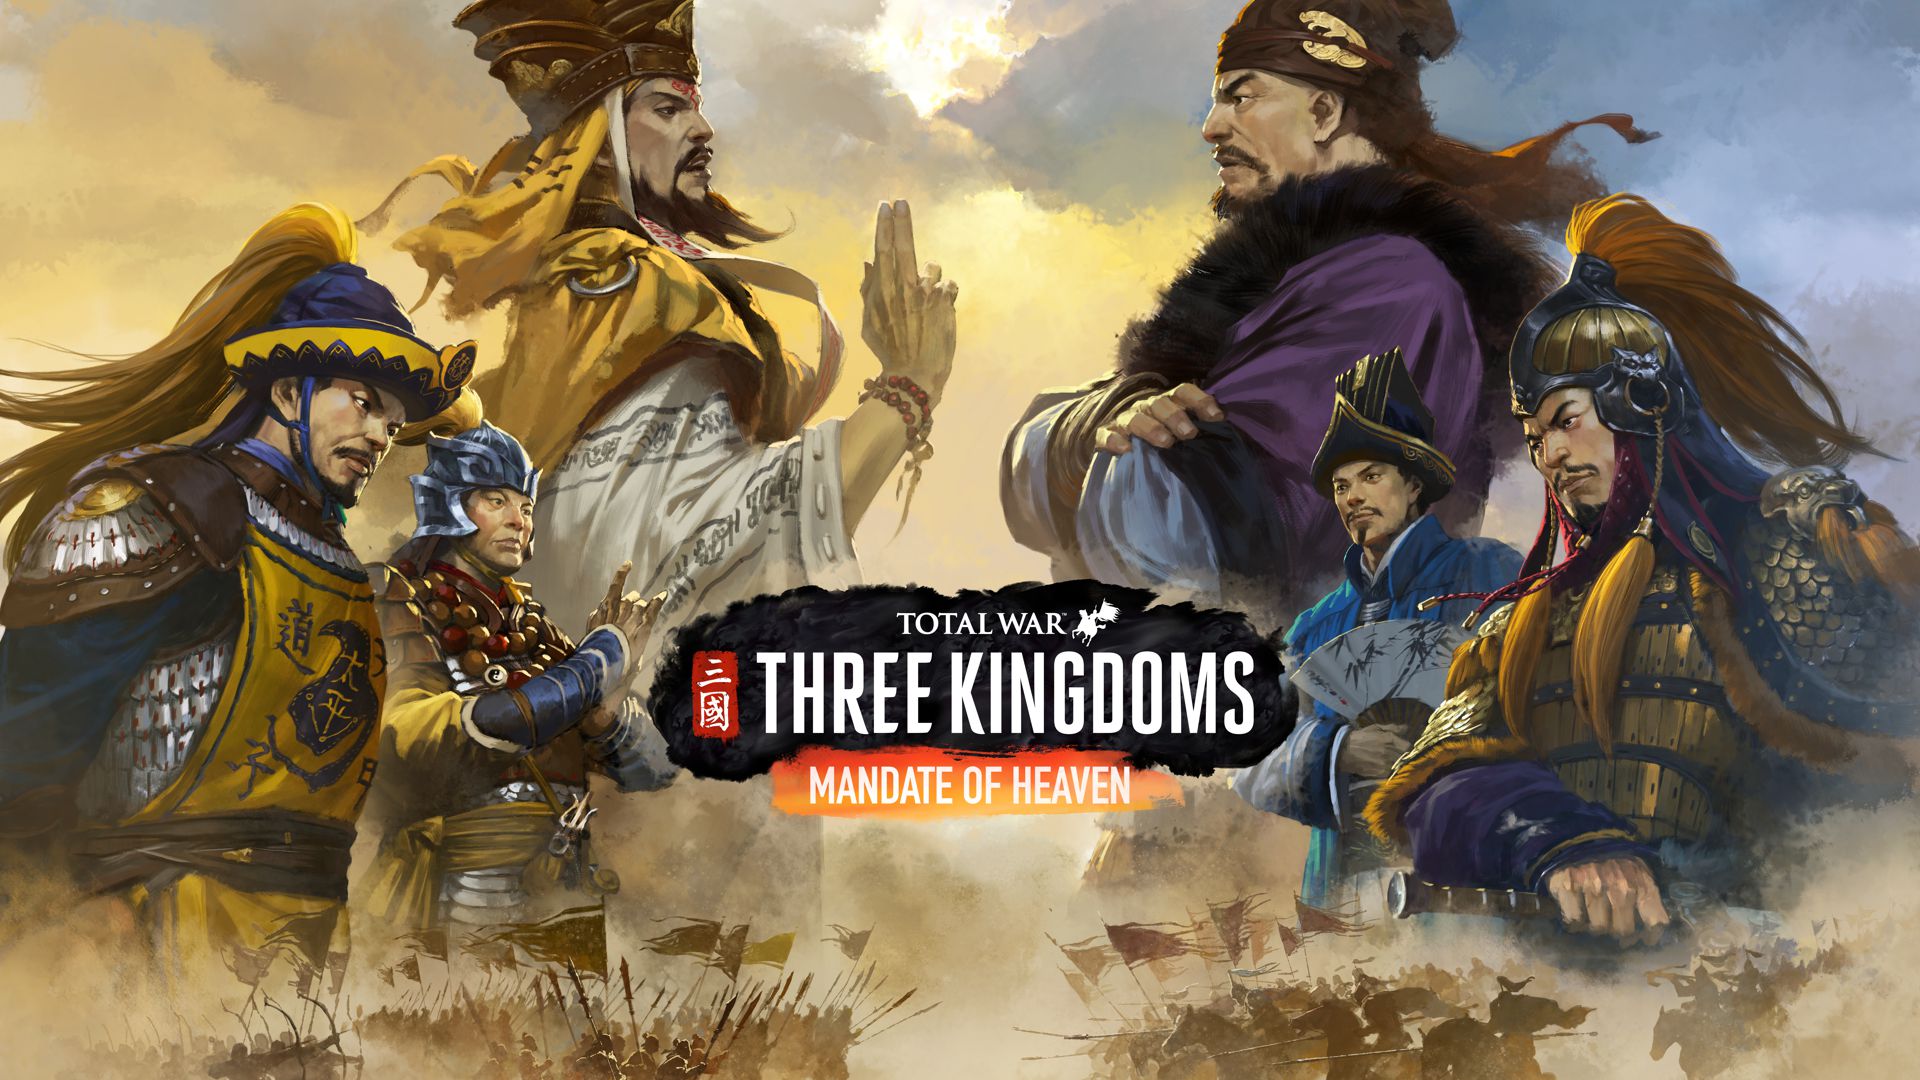 Total War Three Kingdoms Mandate of Heaven